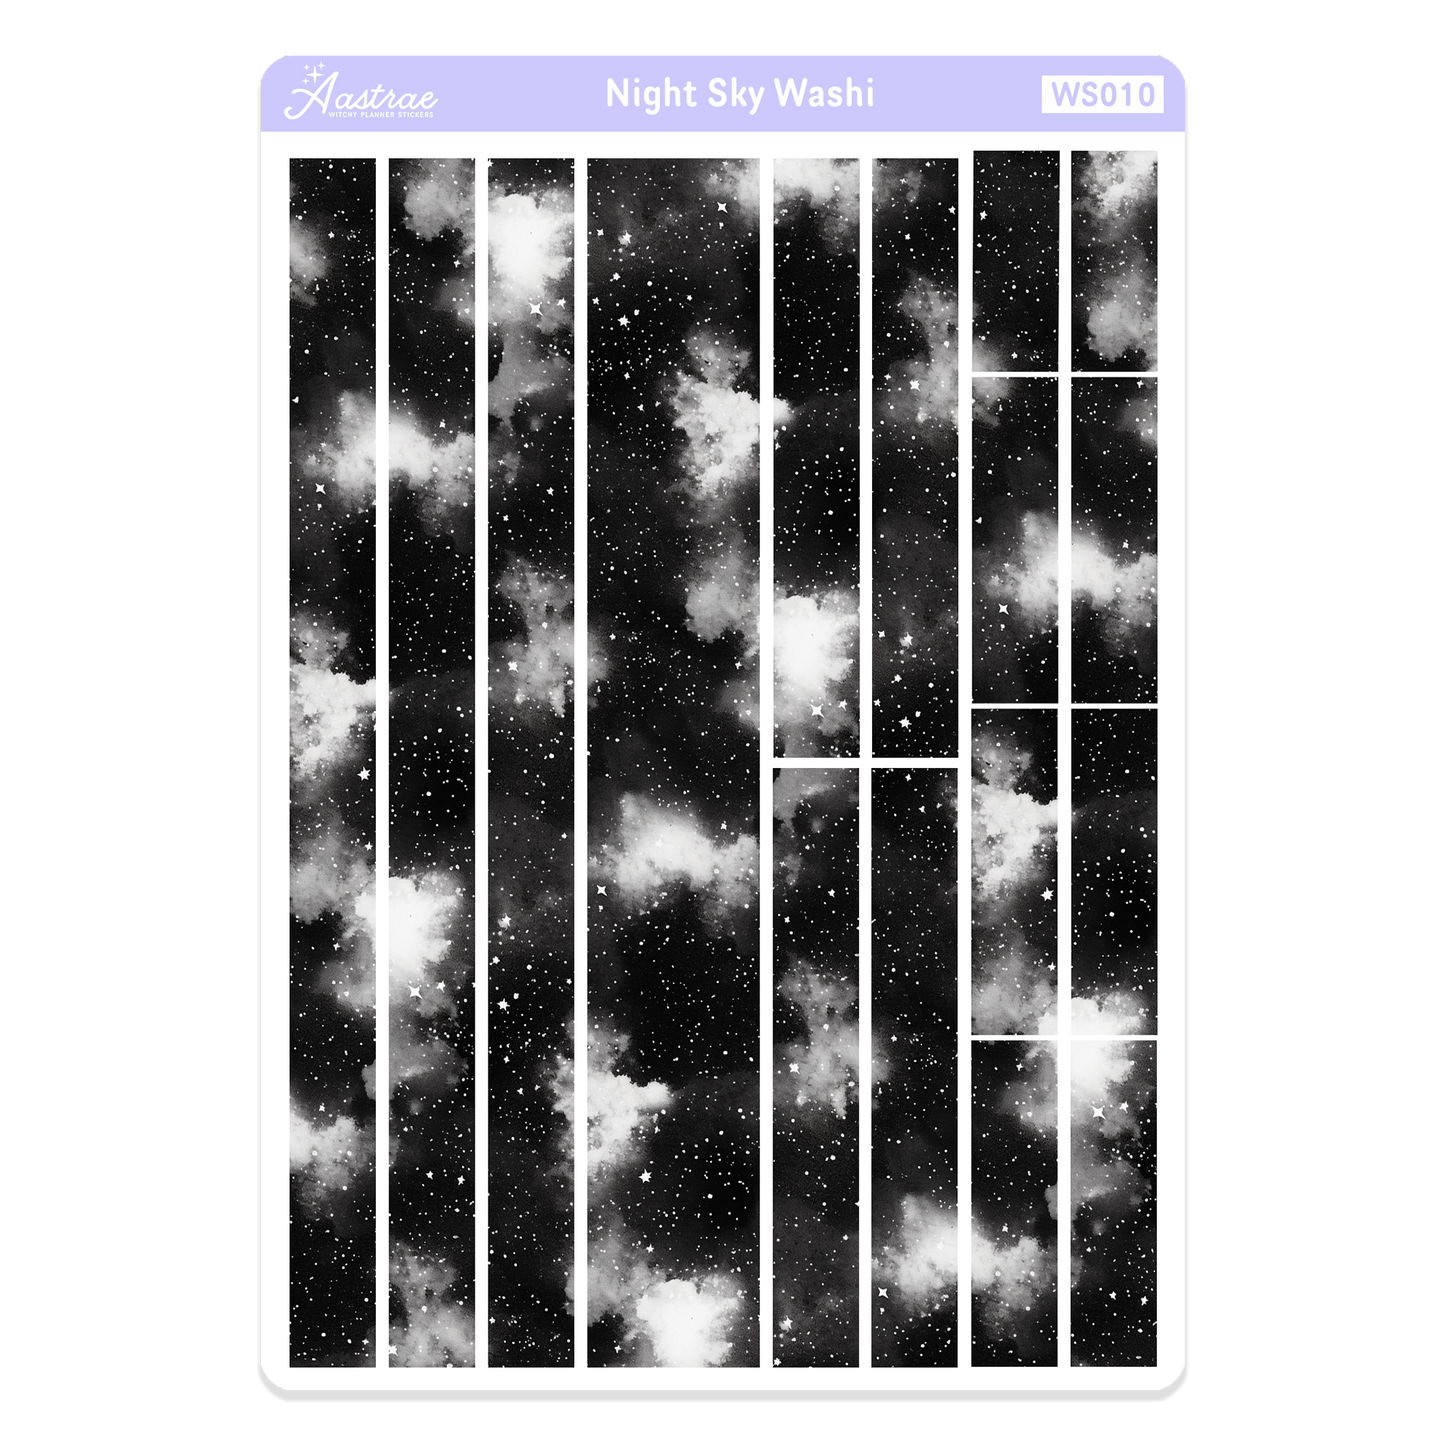 Night Sky Washi Tape Sticker Sheet